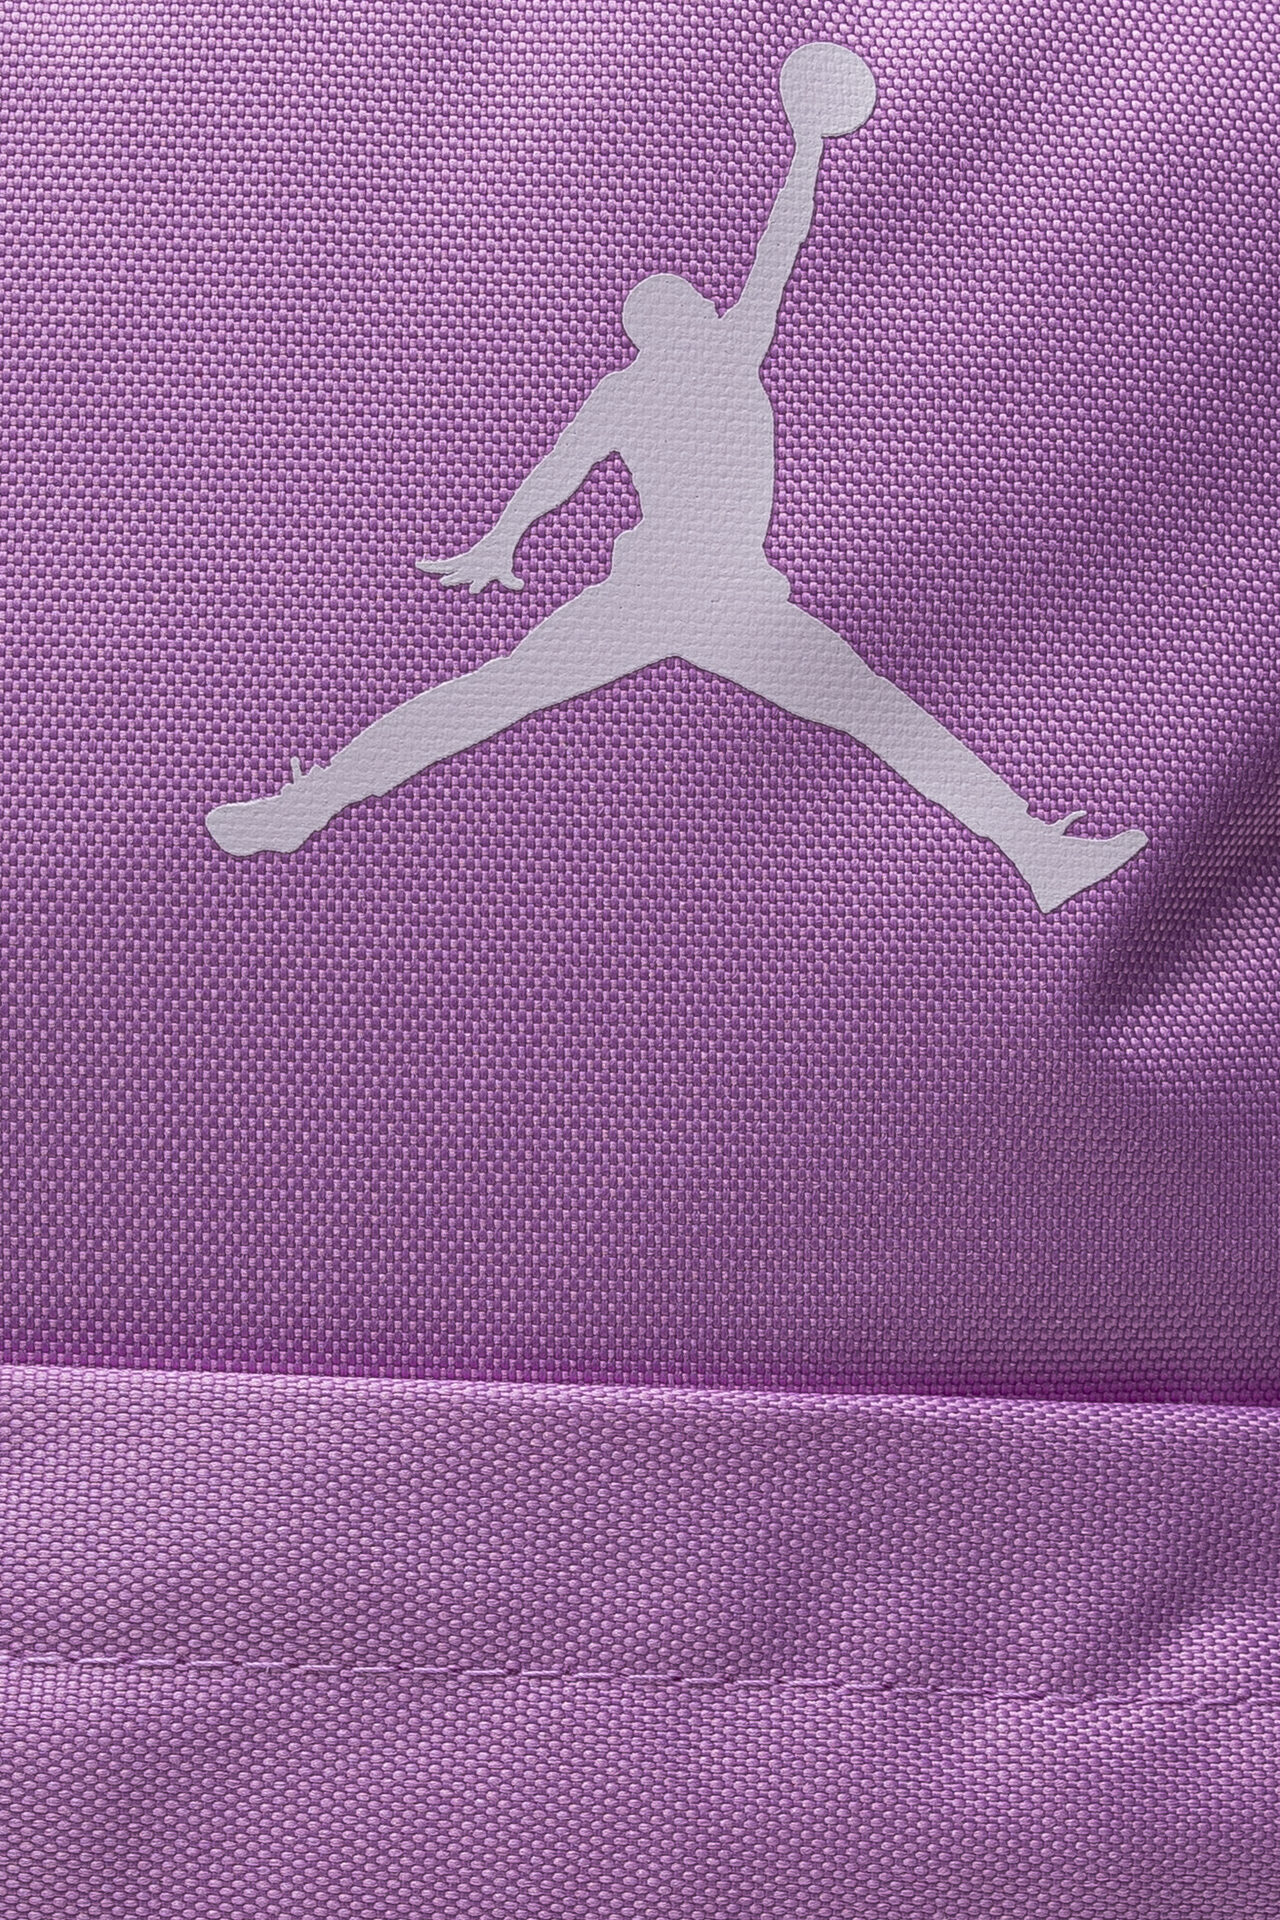 Zaino Nike Jumpman Mini Pack da bambina lavanda in tessuto